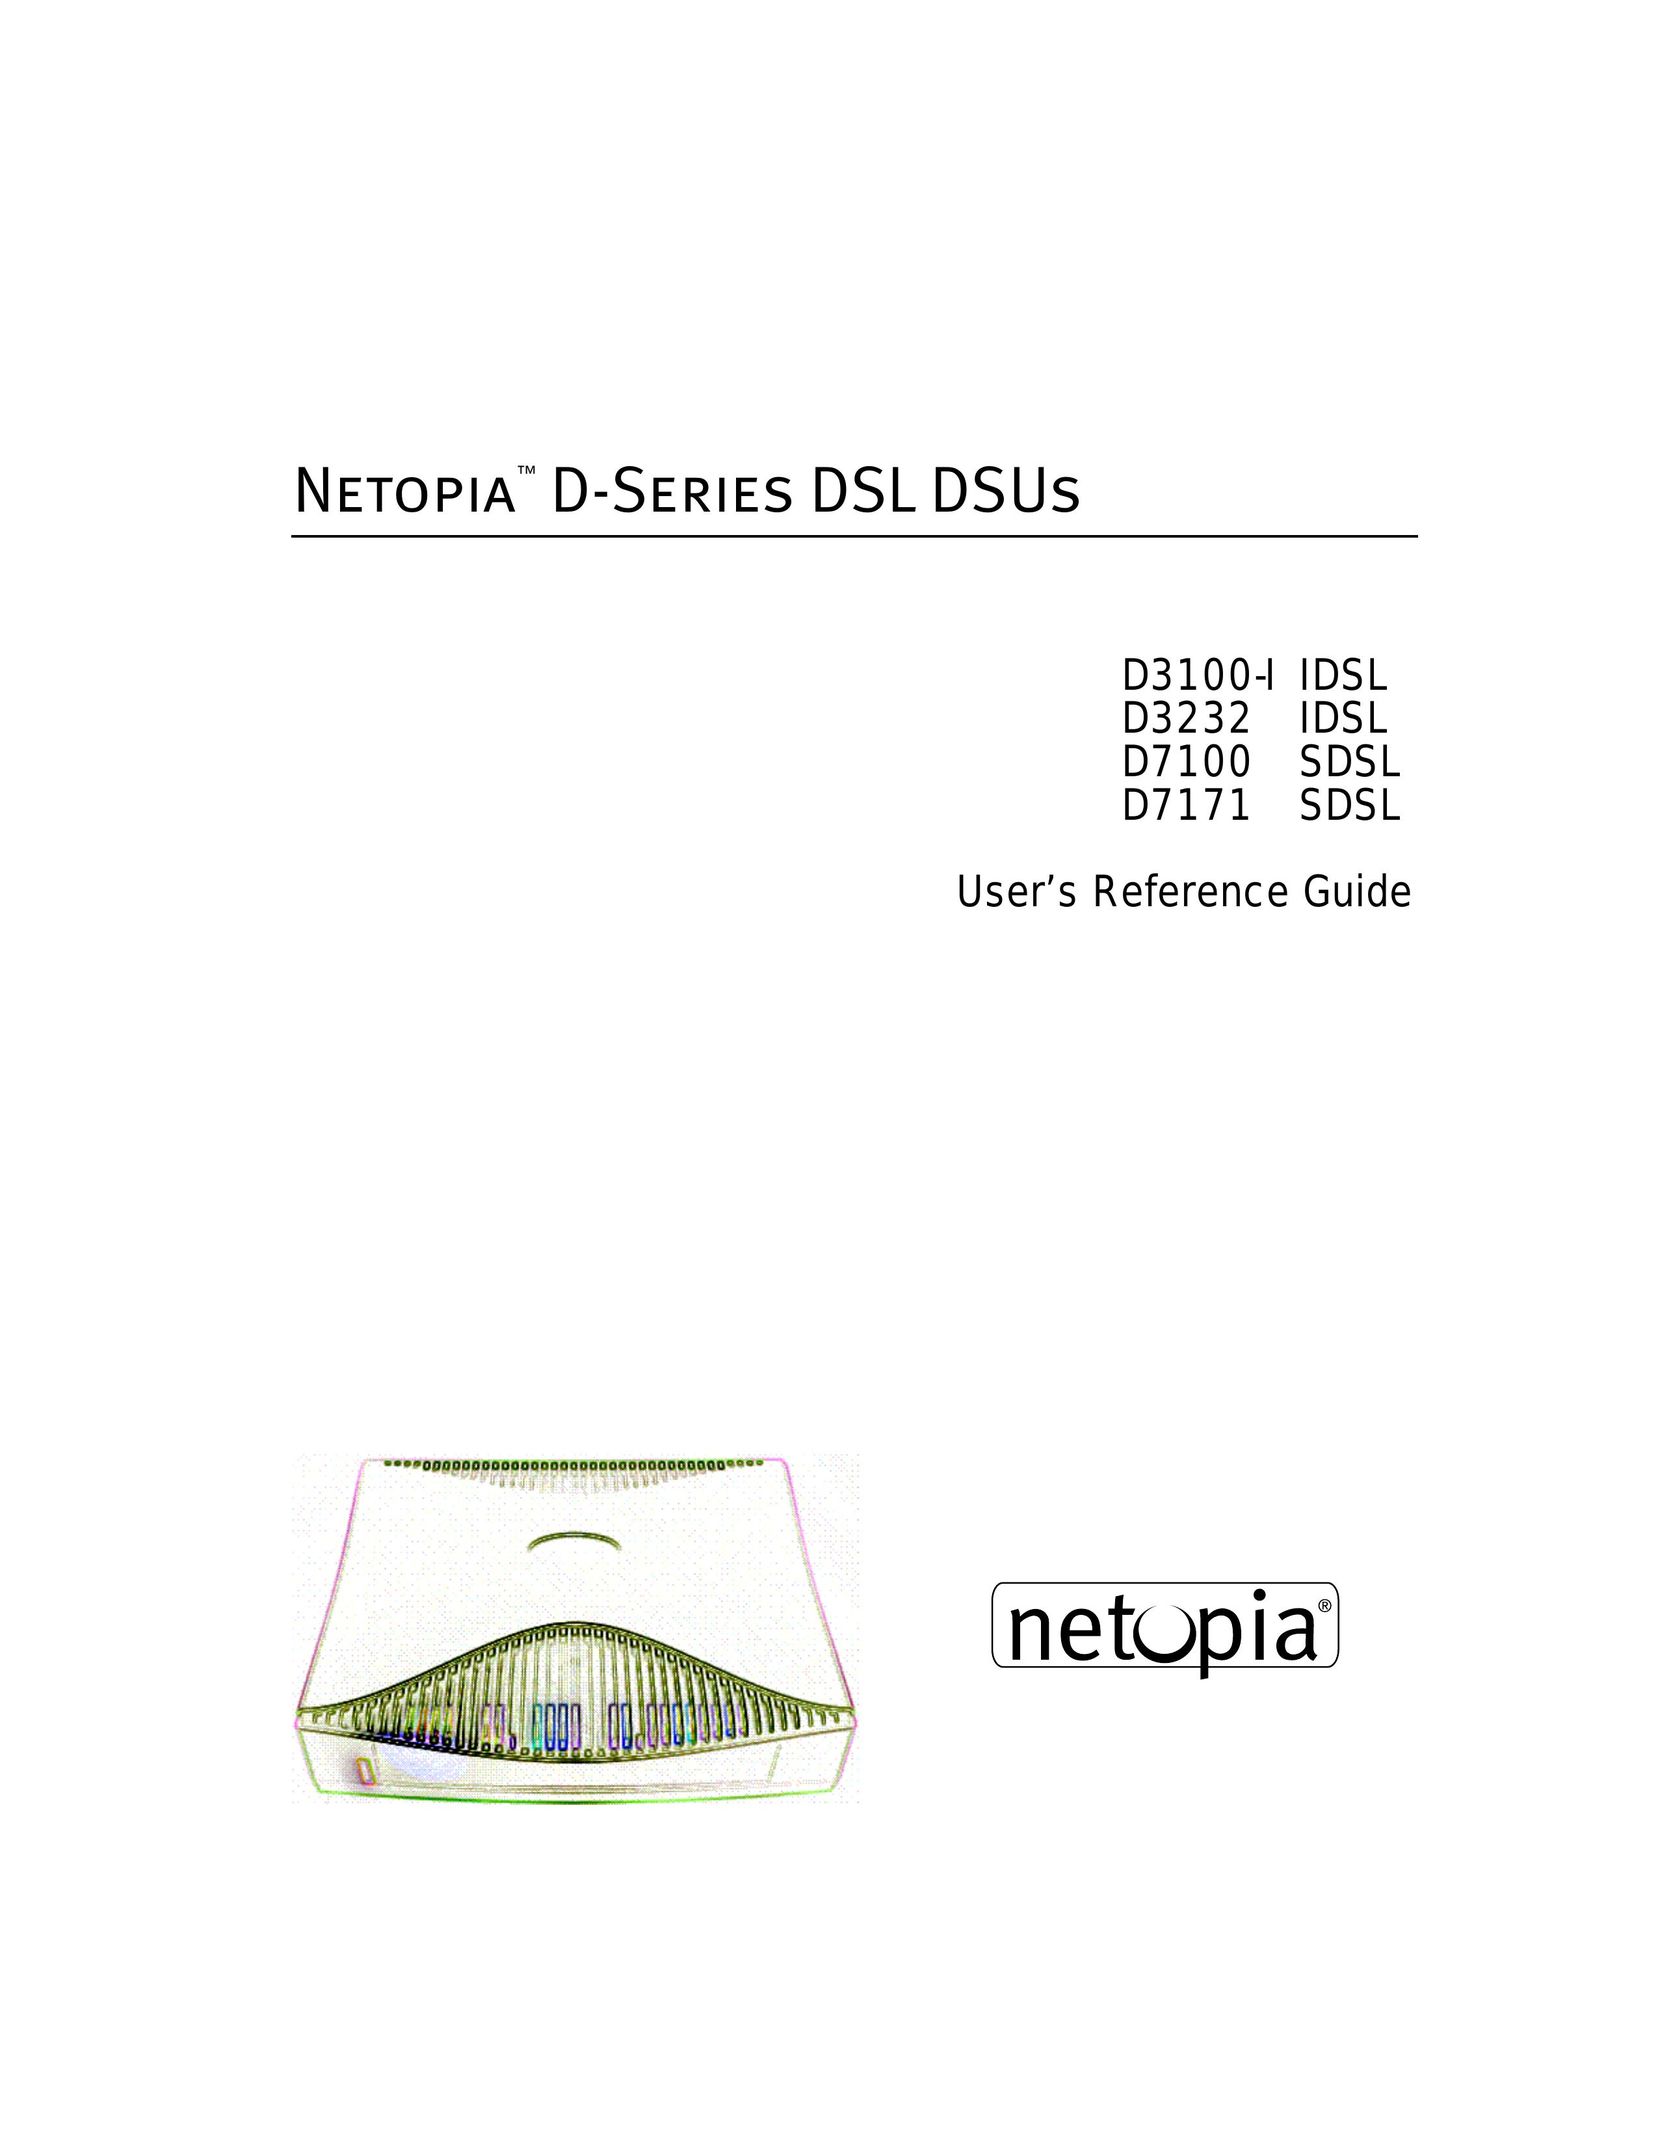 Netopia D7171 SDSL Network Router User Manual